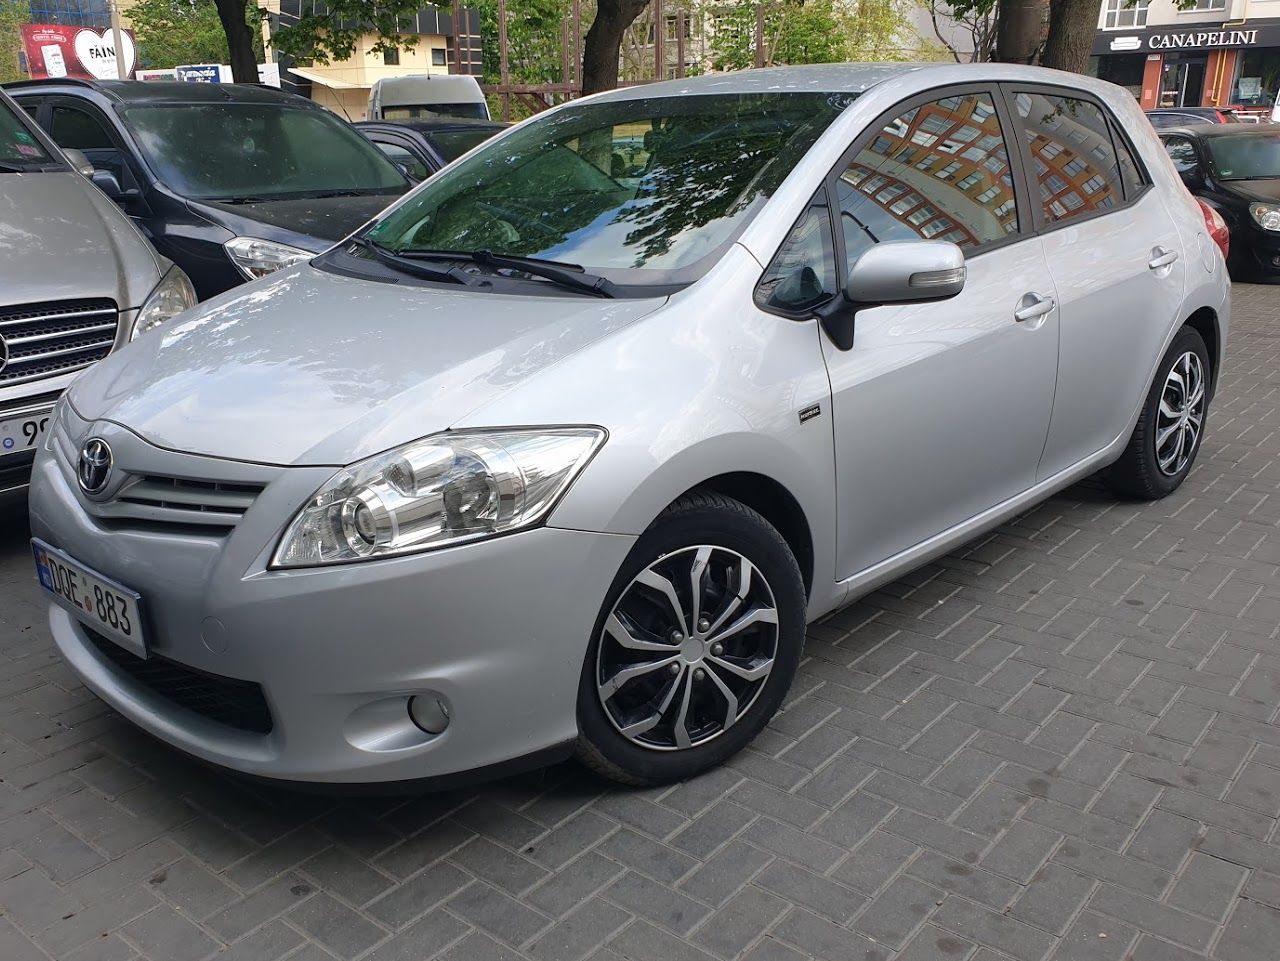 Toyota Auris - Chirie auto / rent a car / авто прокат foto 1